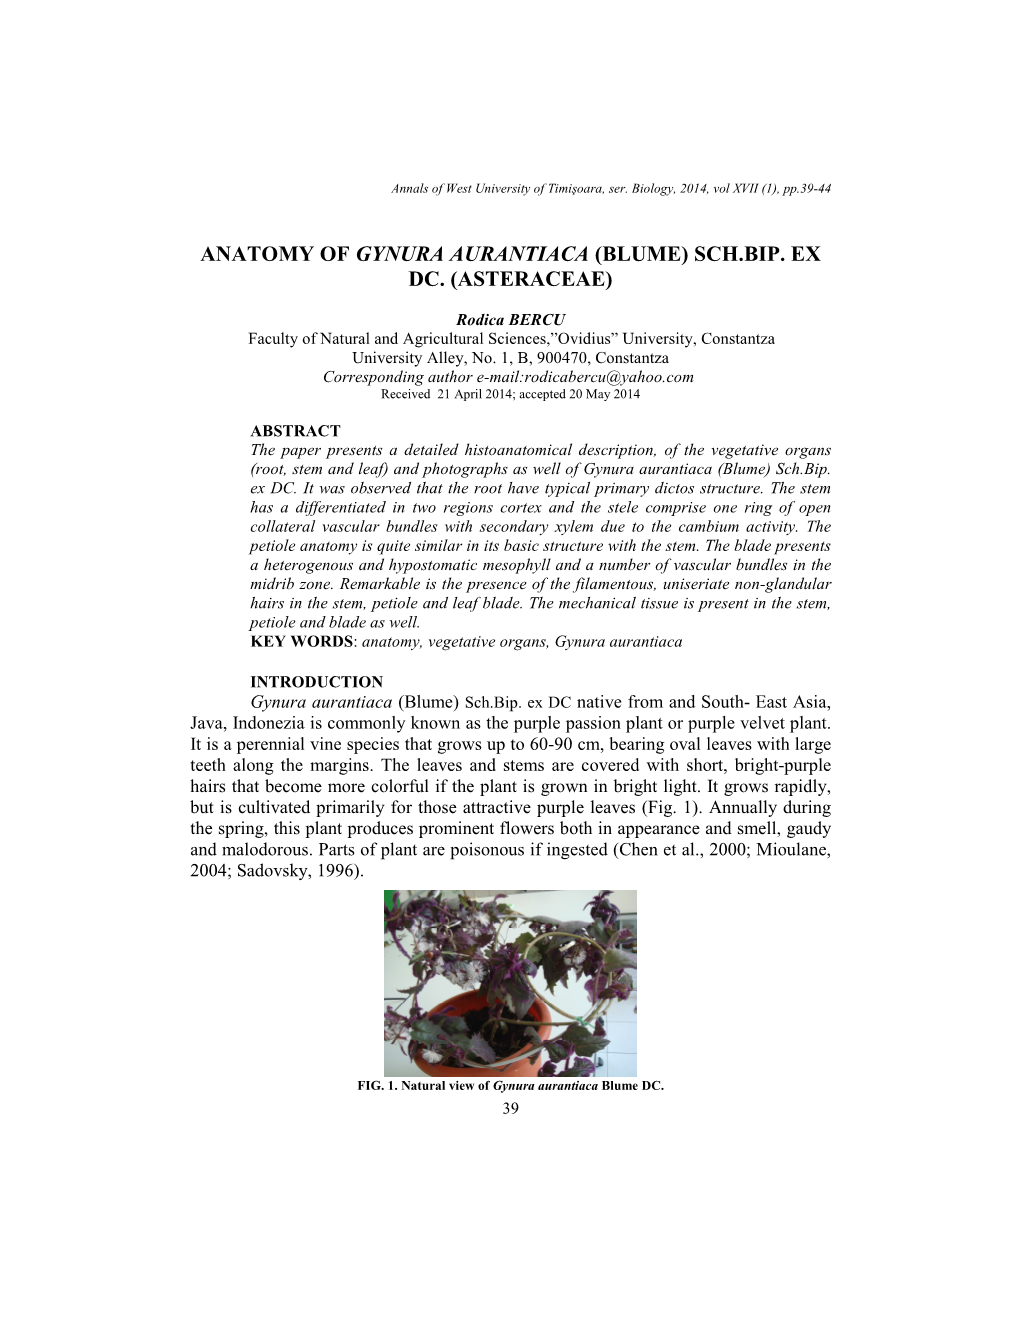 Anatomy of Gynura Aurantiaca (Blume) Sch.Bip